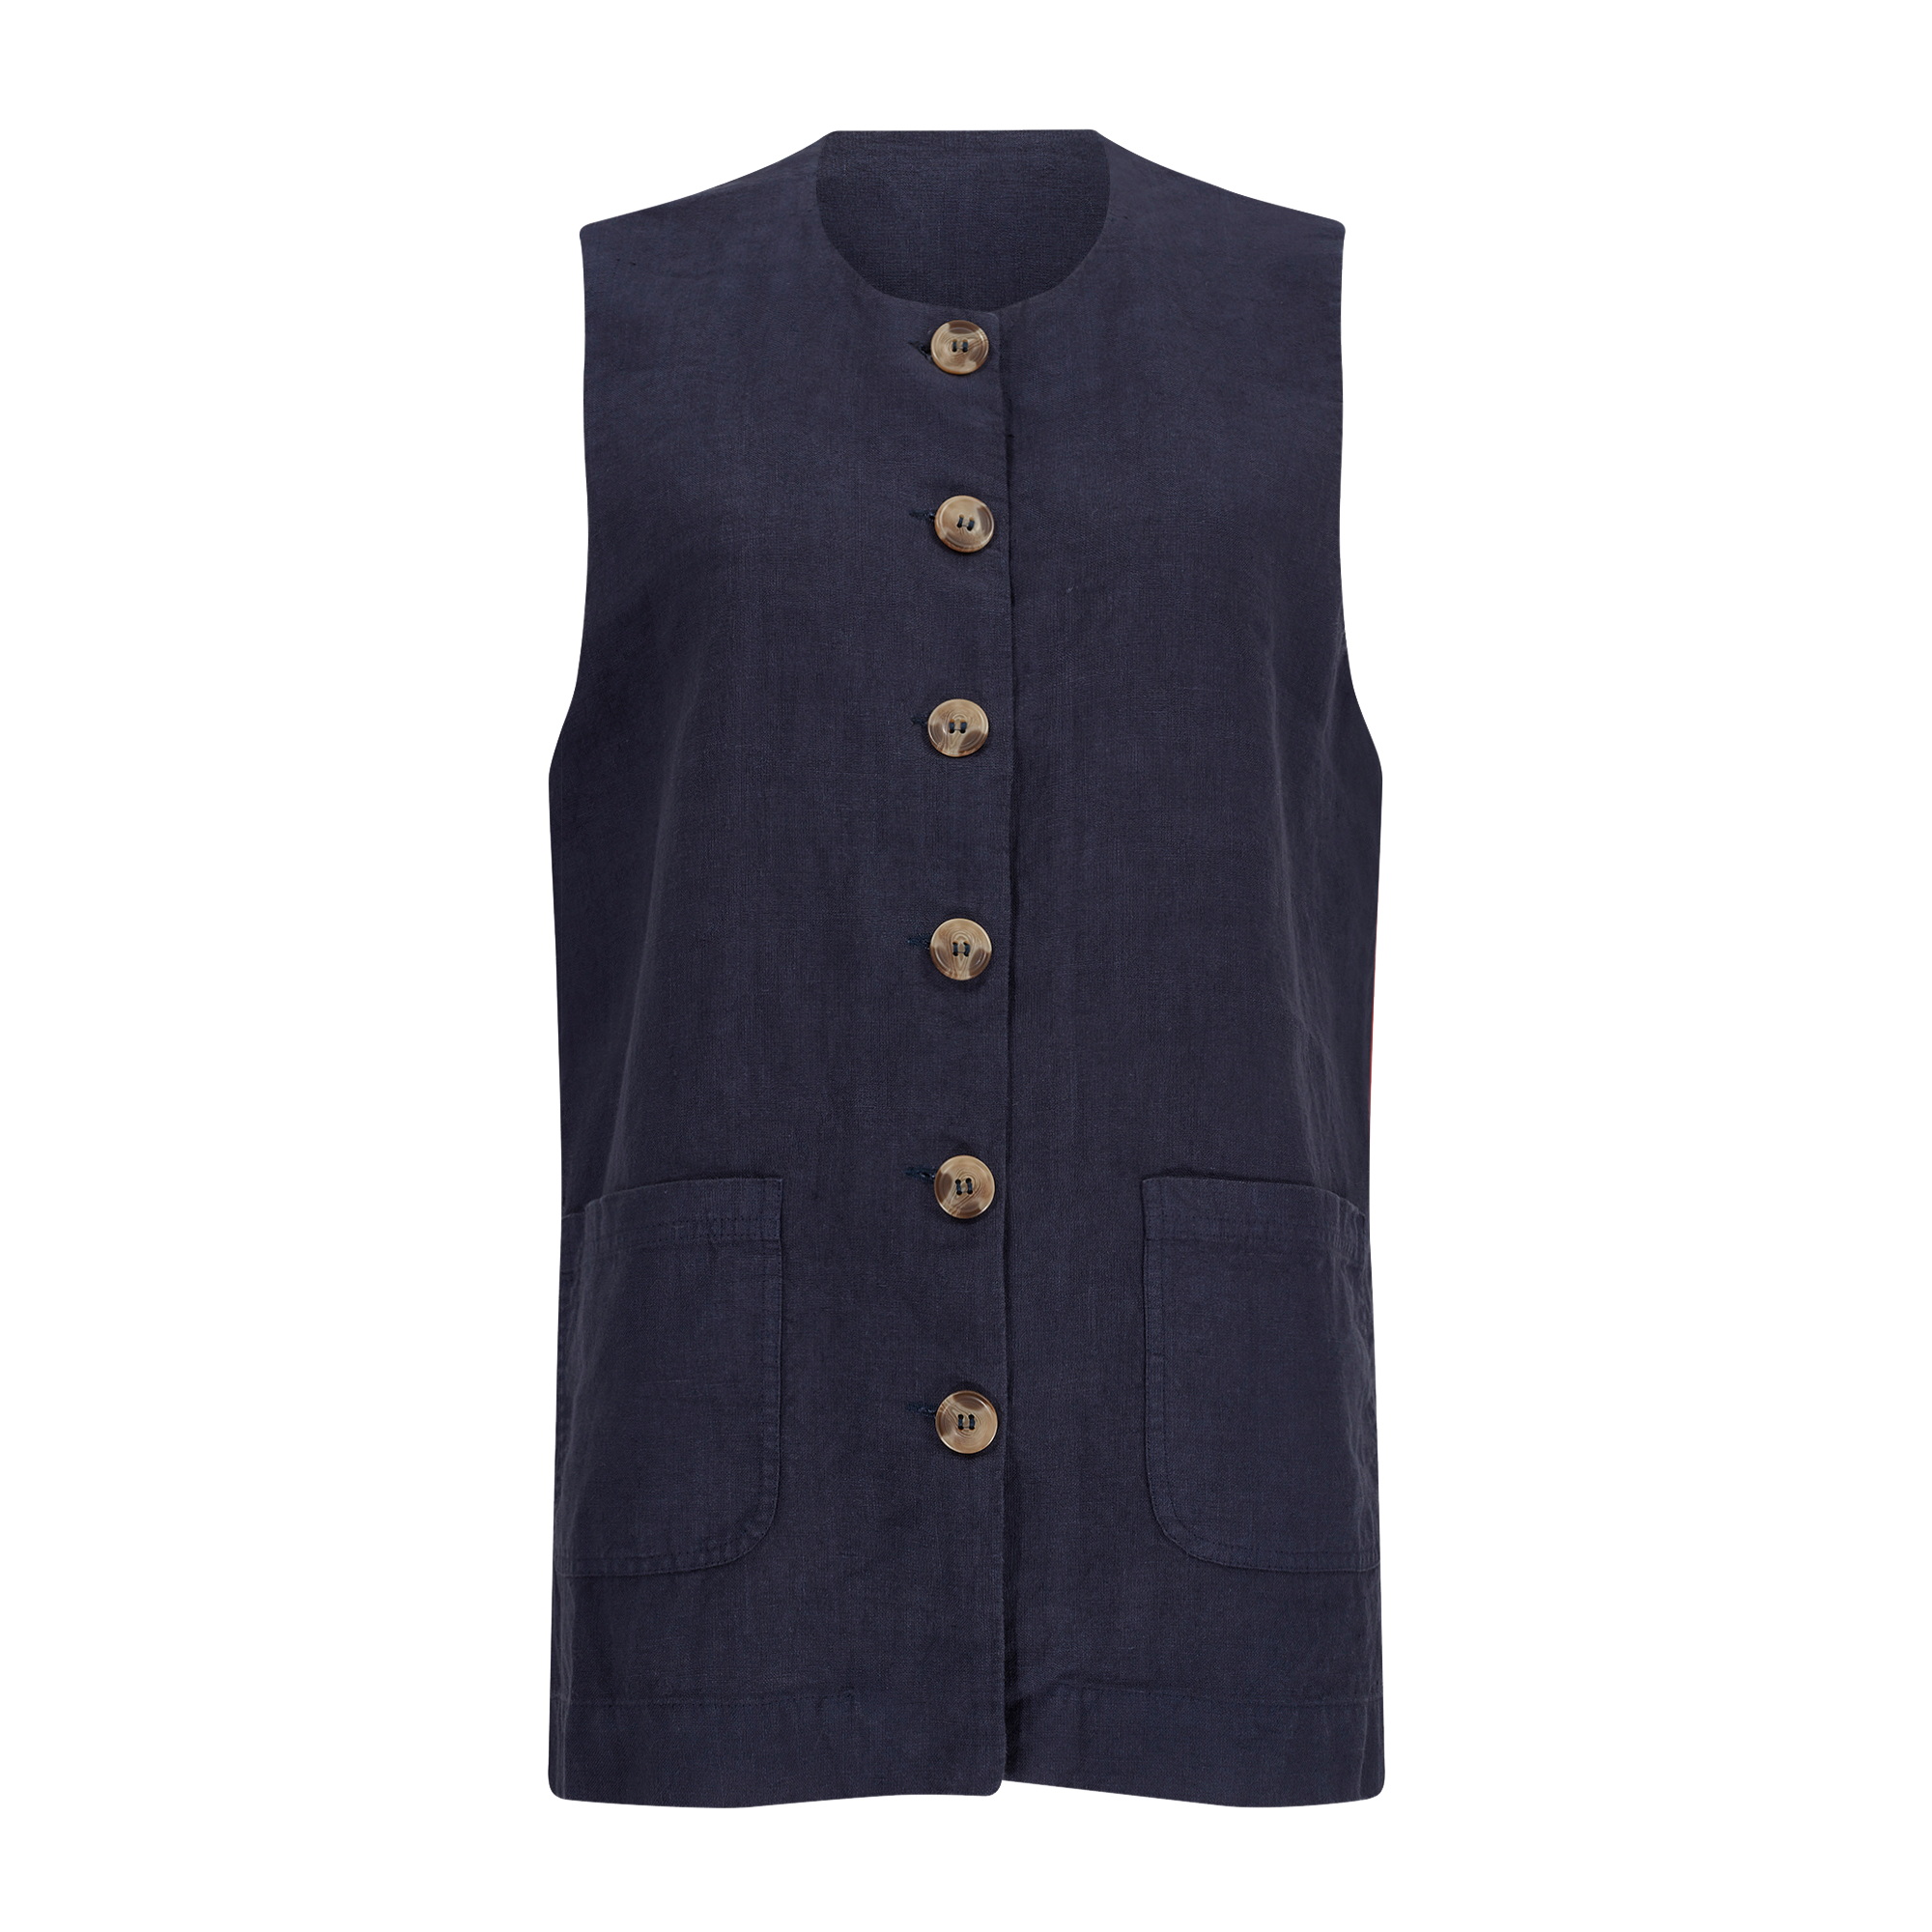 The Workwear Waistcoat